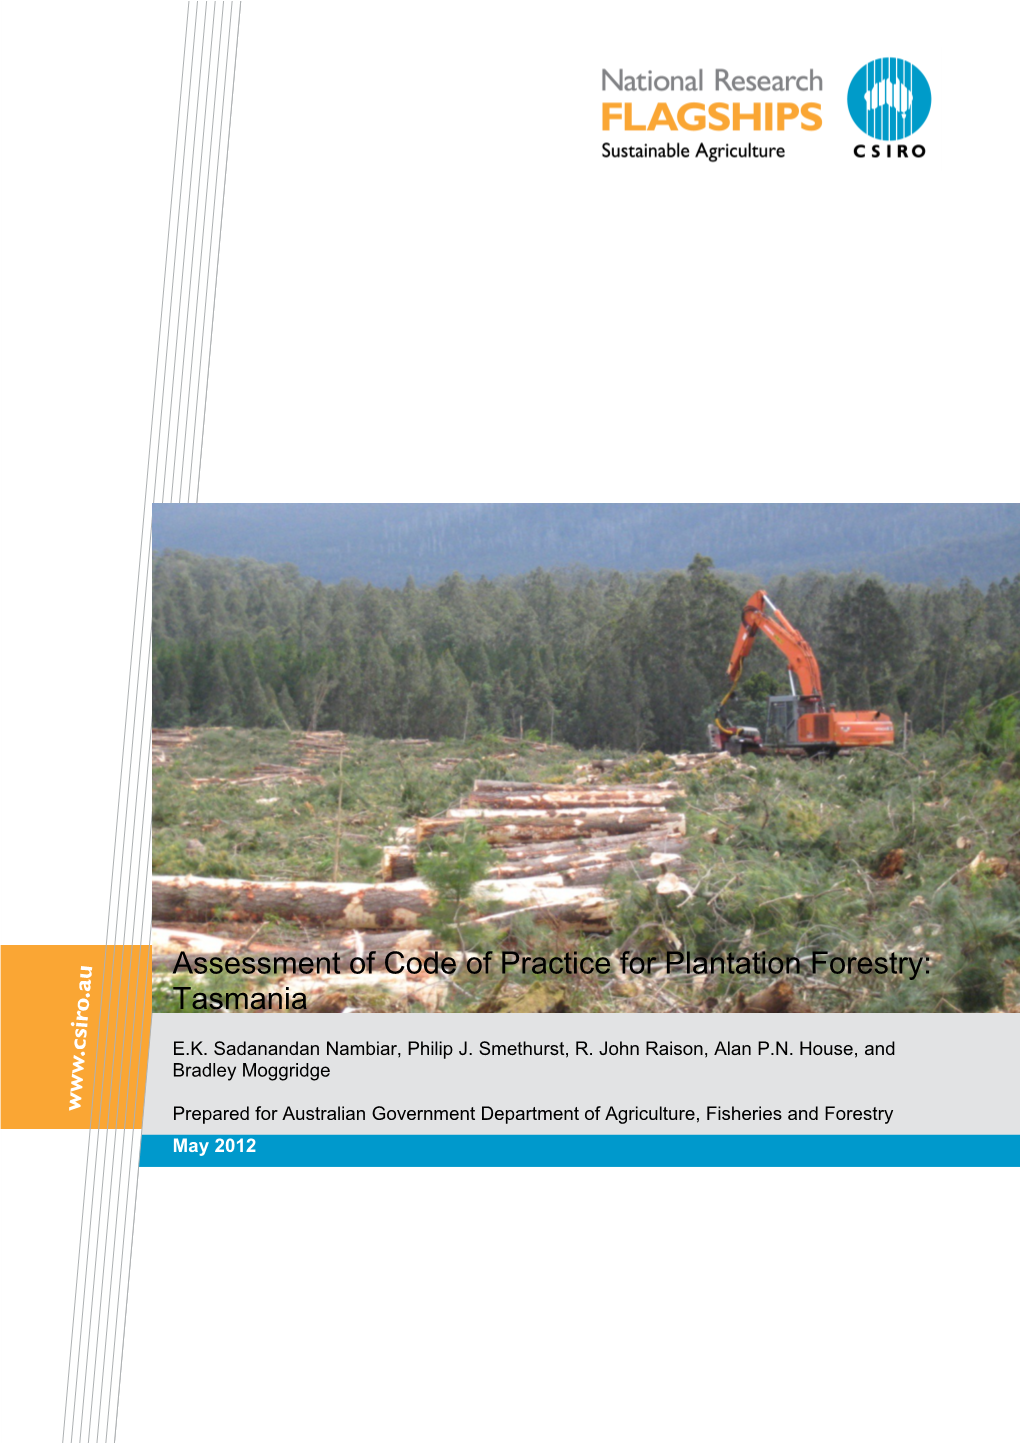 Cover Photo:Harvesting Operation in a Pinus Radiata Plantation, Tasmania. the Heavy Slash